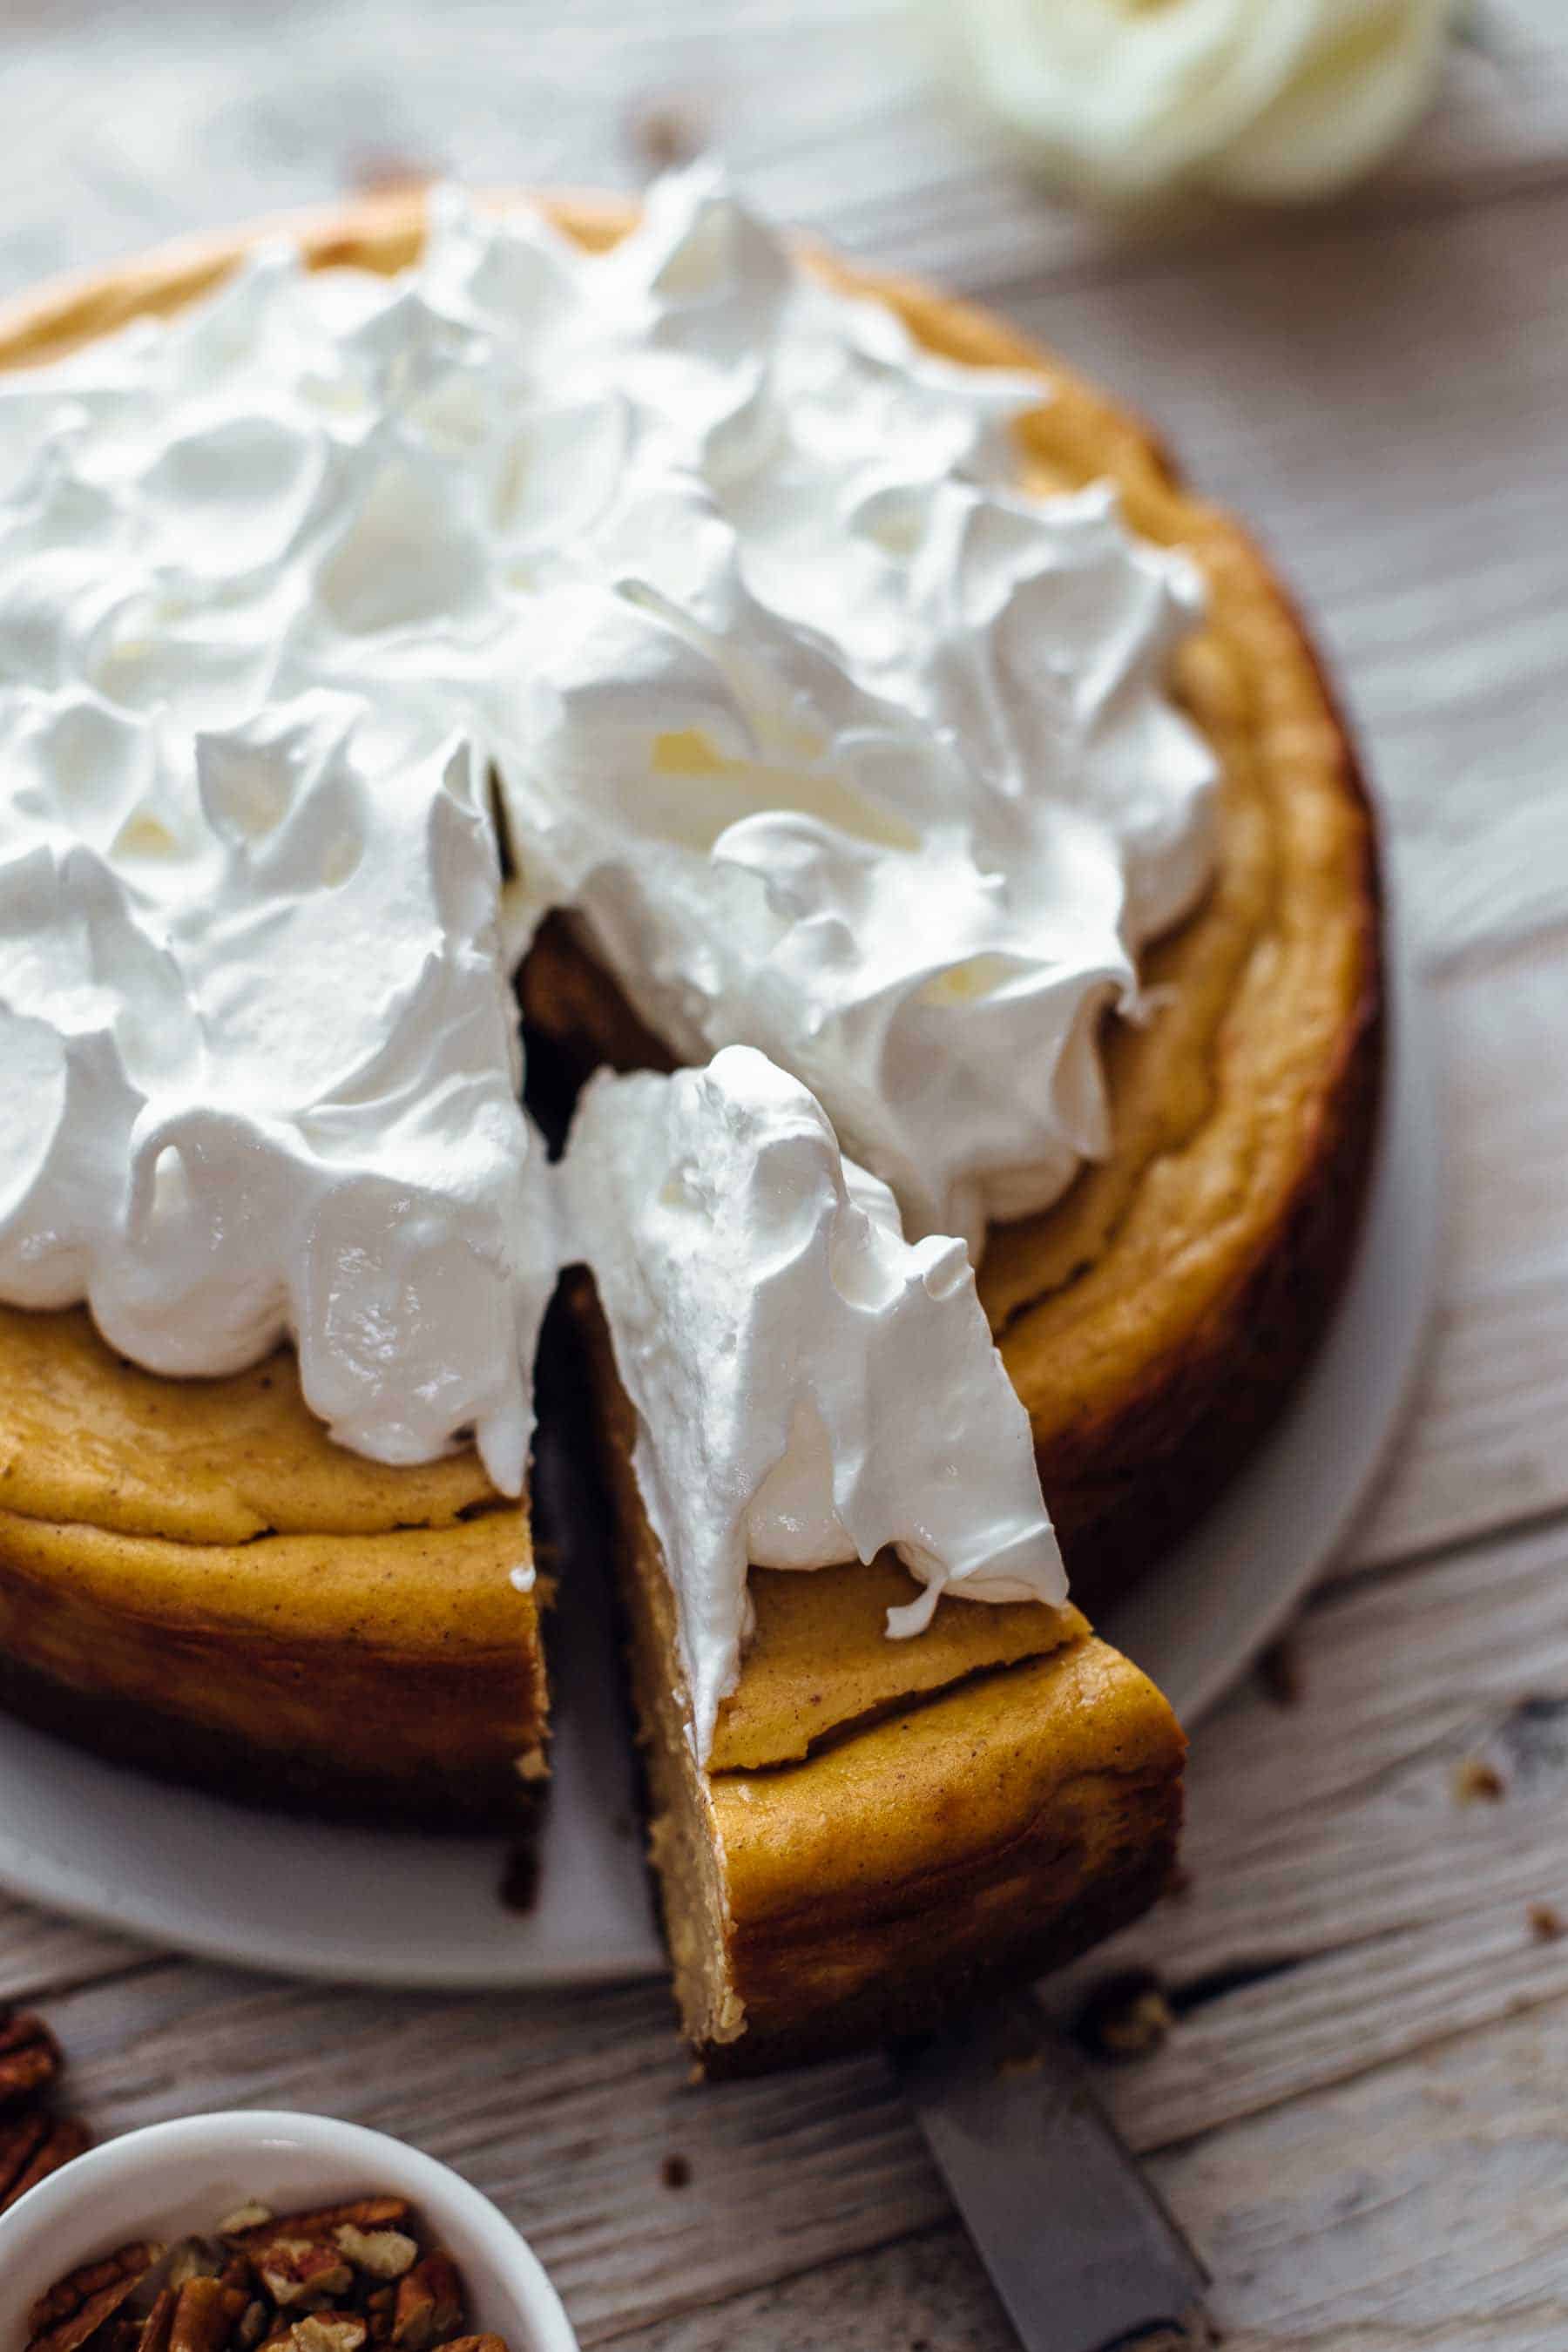 A slice of Sweet Potato Cheesecake with Marshmallow Meringue